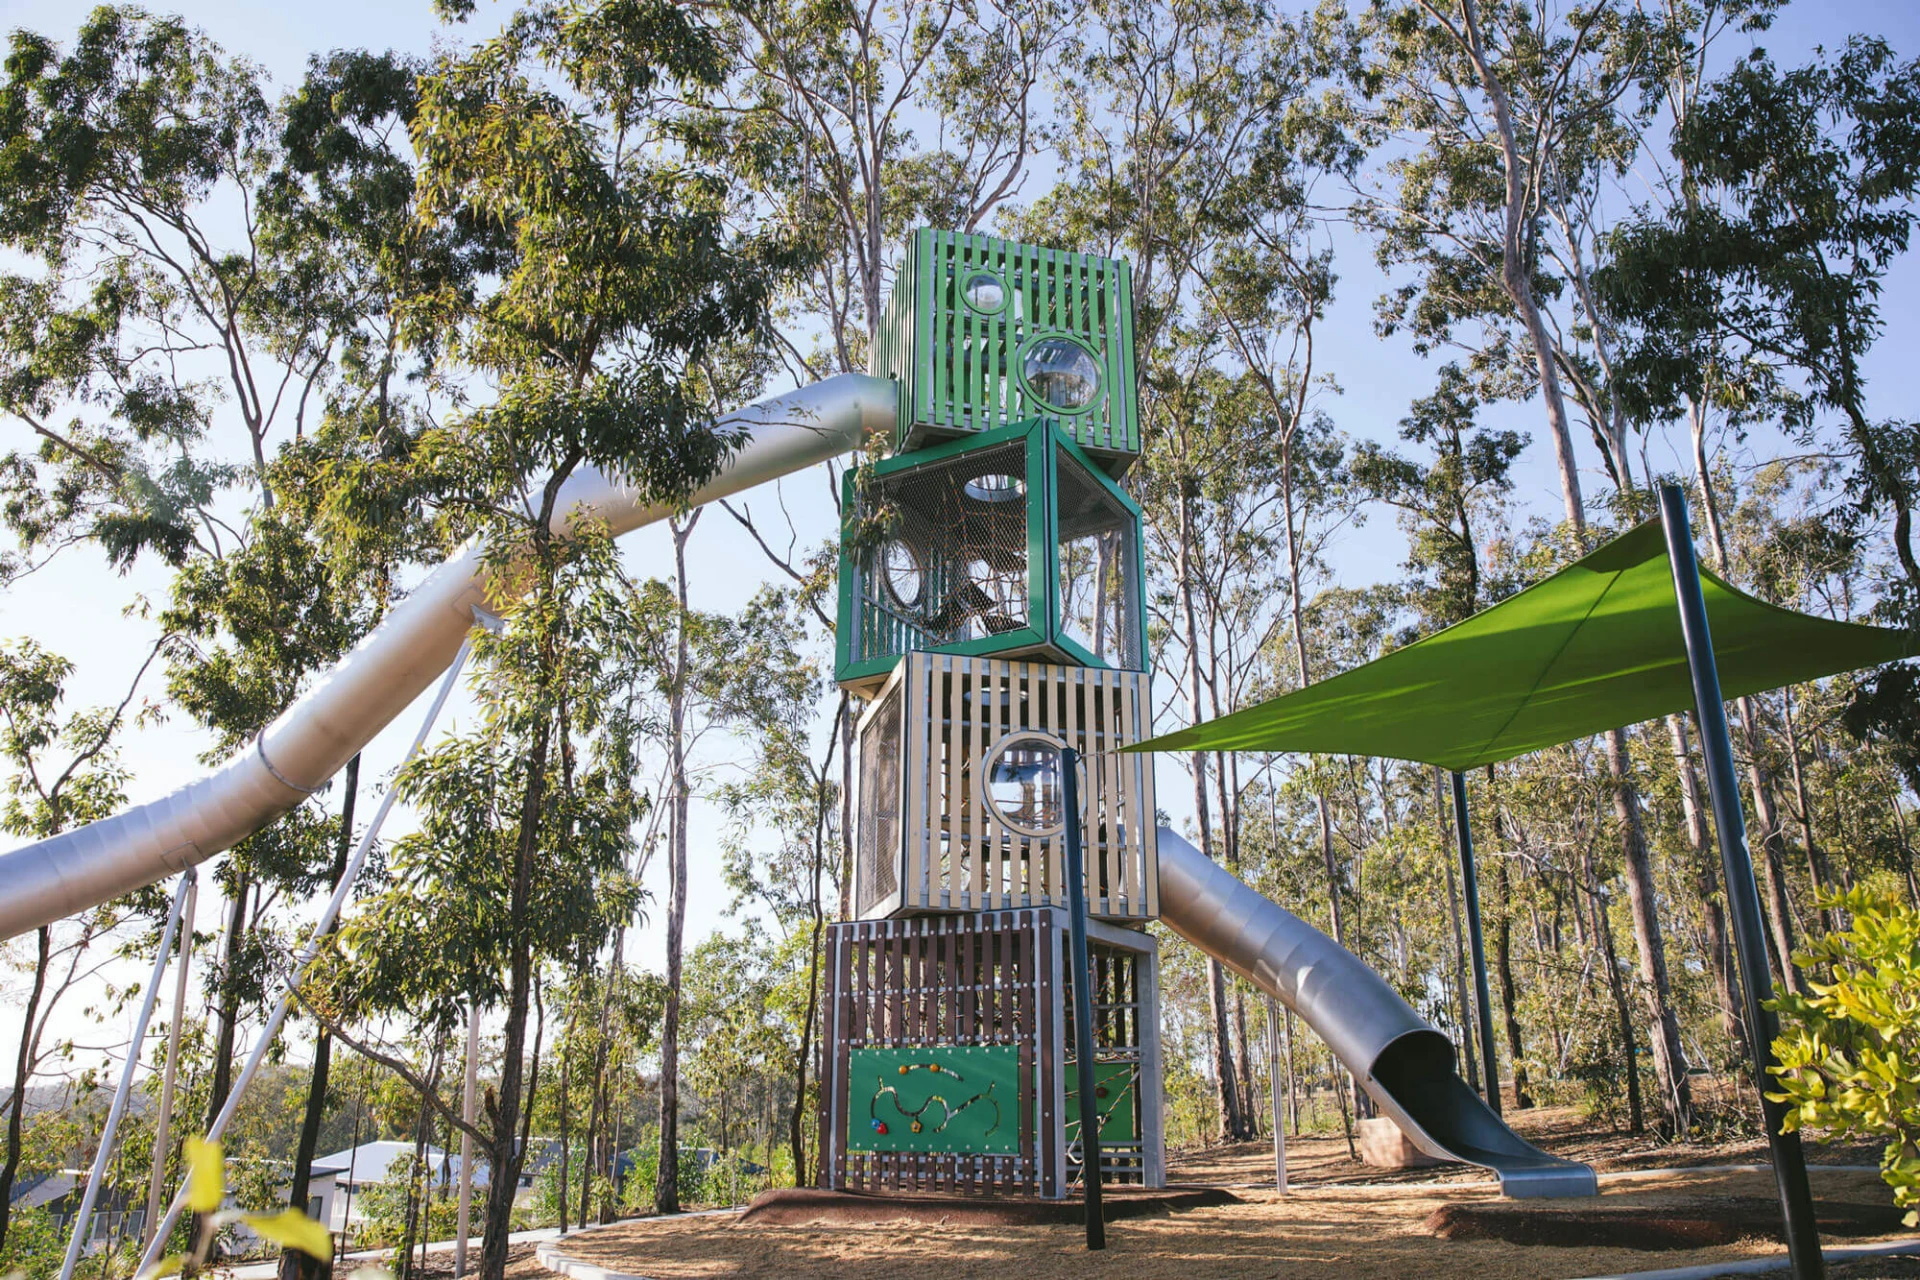 Cube play tower at Tucker Family Park in Australia